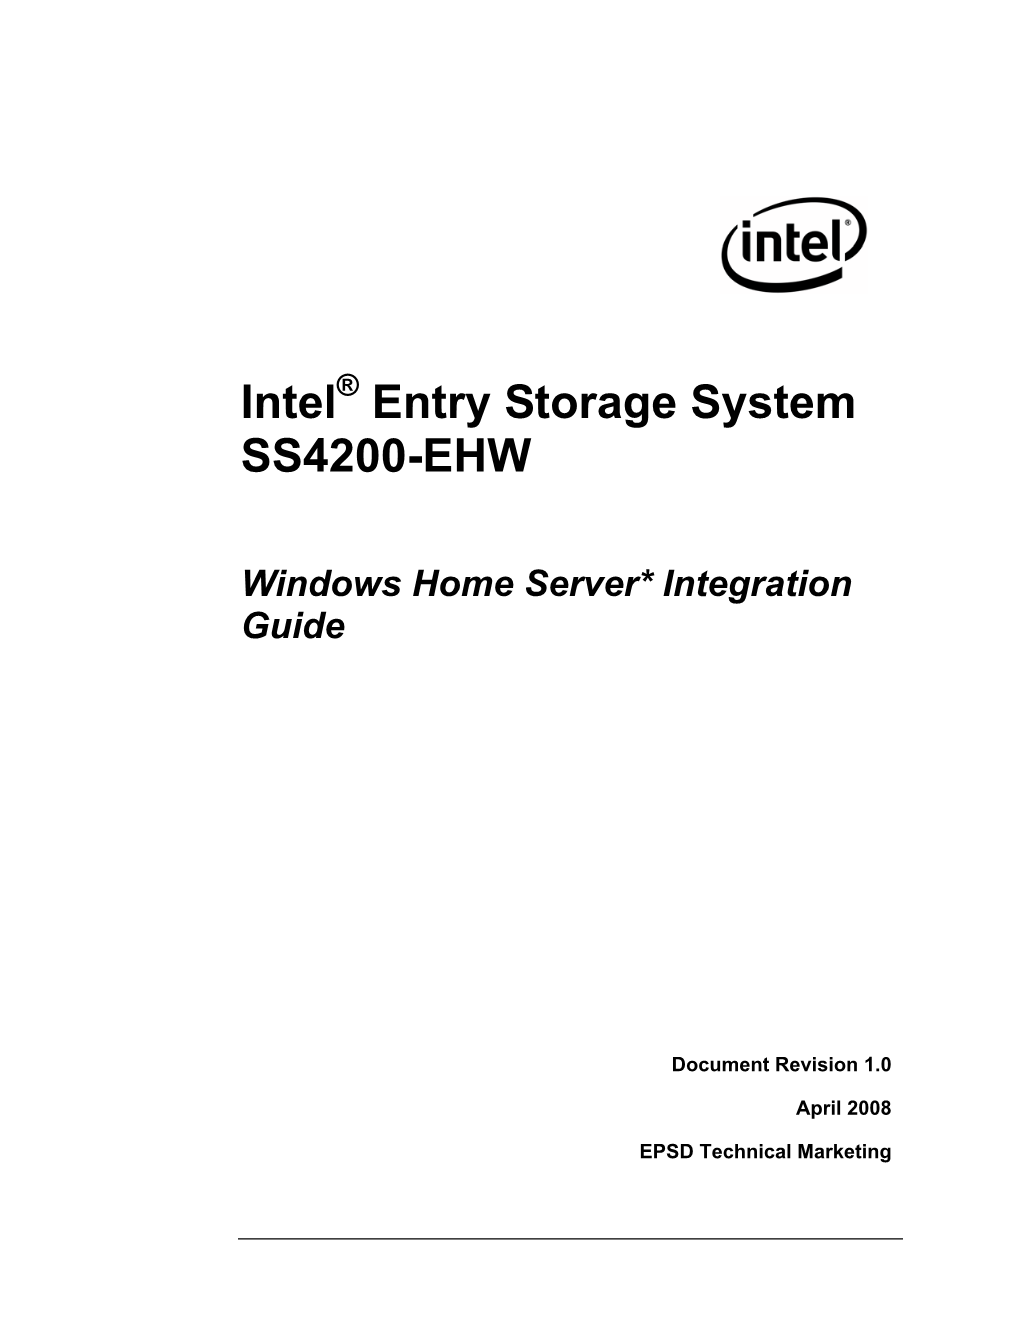 Intel Entry Storage System SS4200-EHW